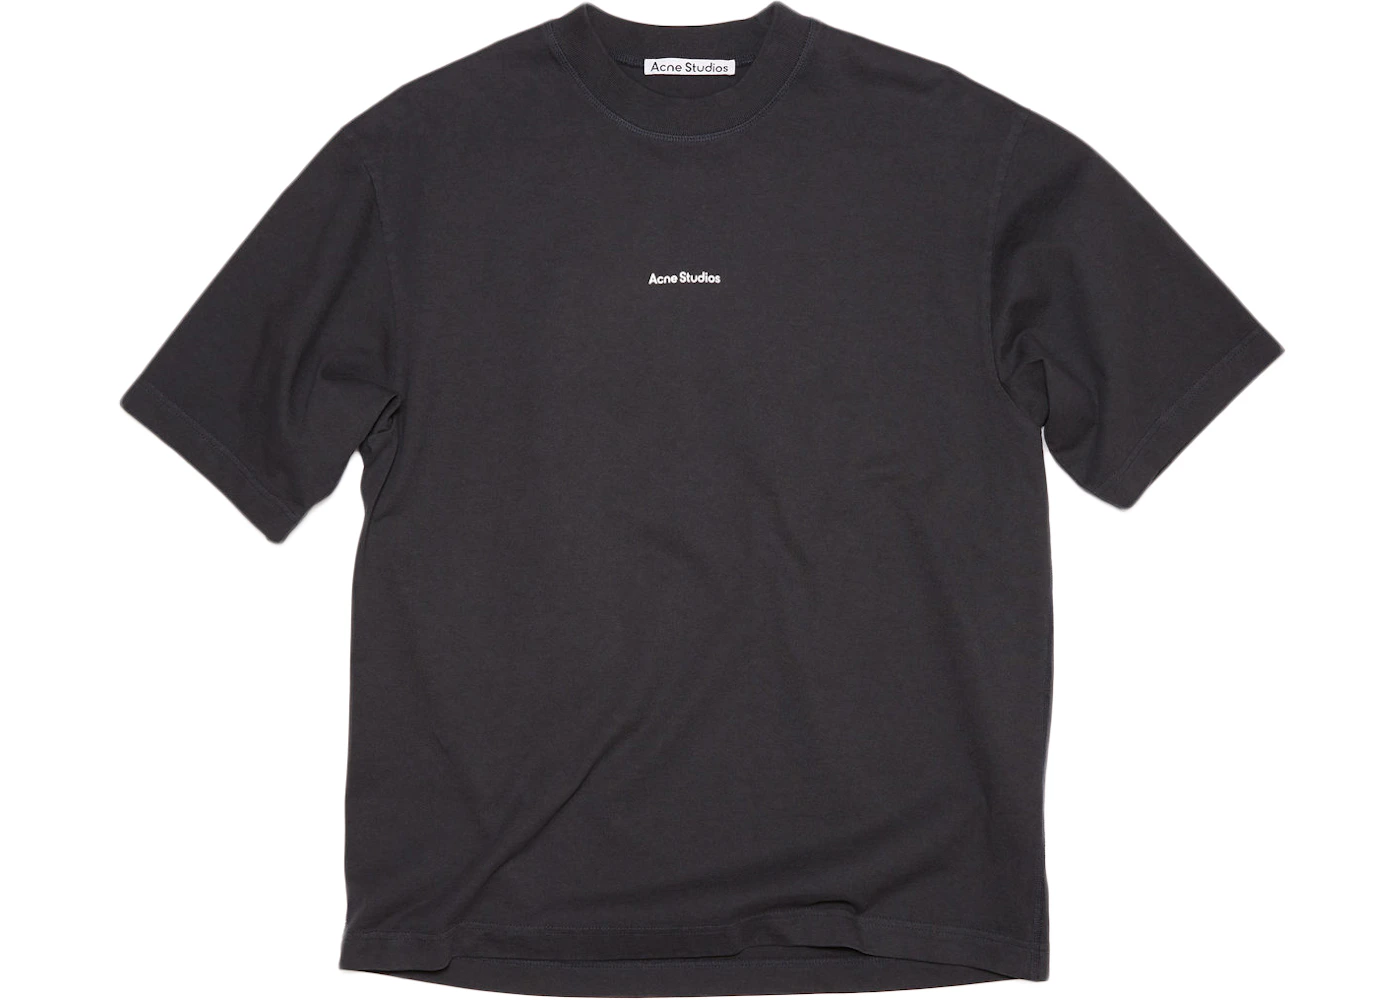 Acne Studios T-shirt Black - US